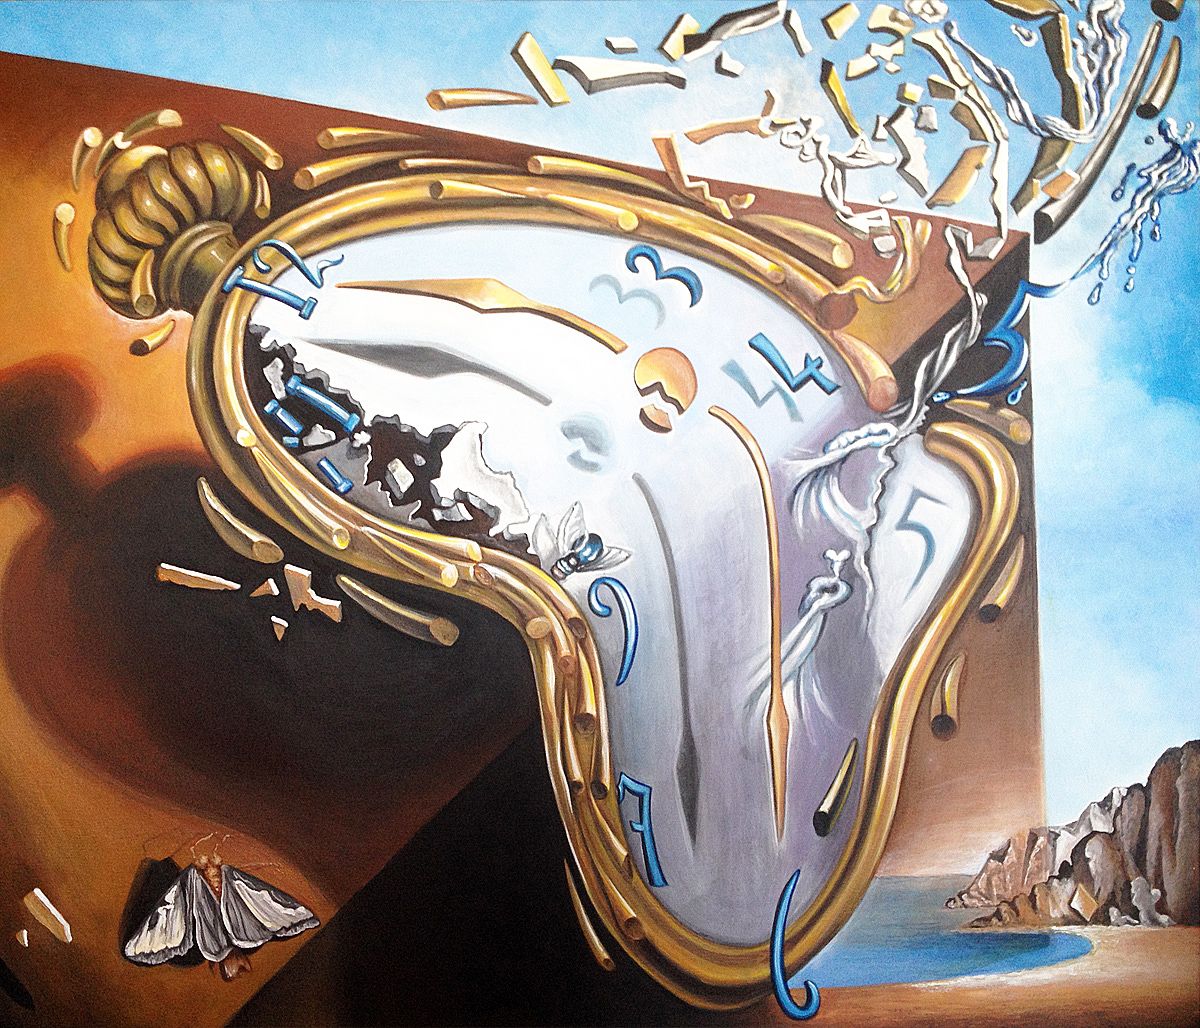 La metafora del tempo deformato viene ben rappresentata nel dipinto surrealista "Orologio Molle" di Salvador Dalí